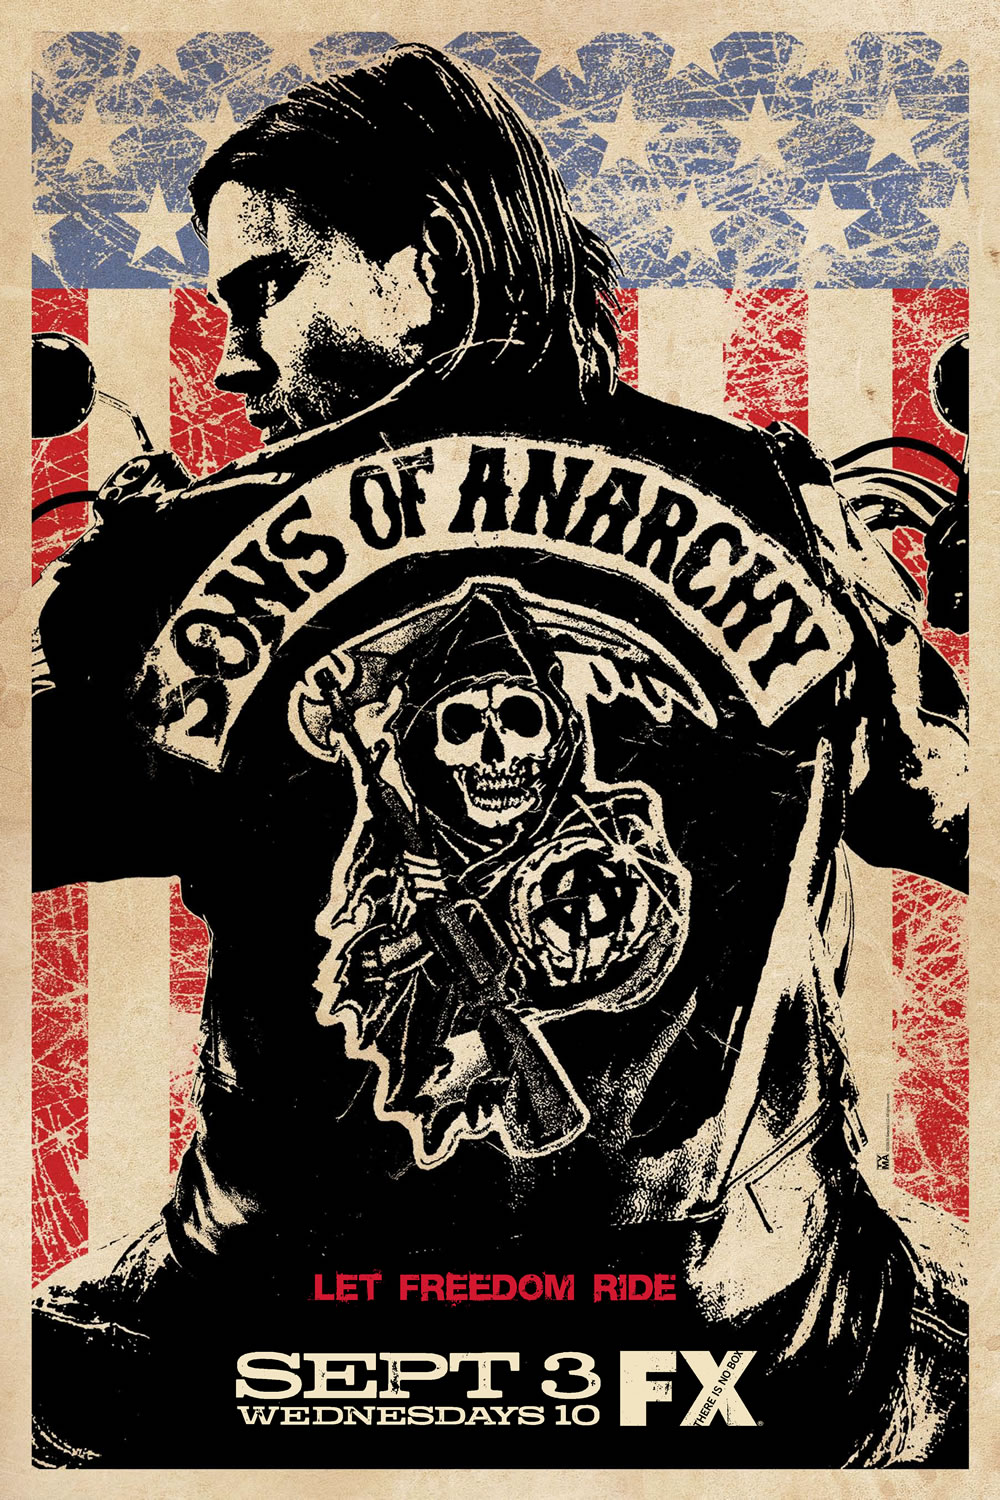 Sons of Anarchy Season 1 DVD Boxset